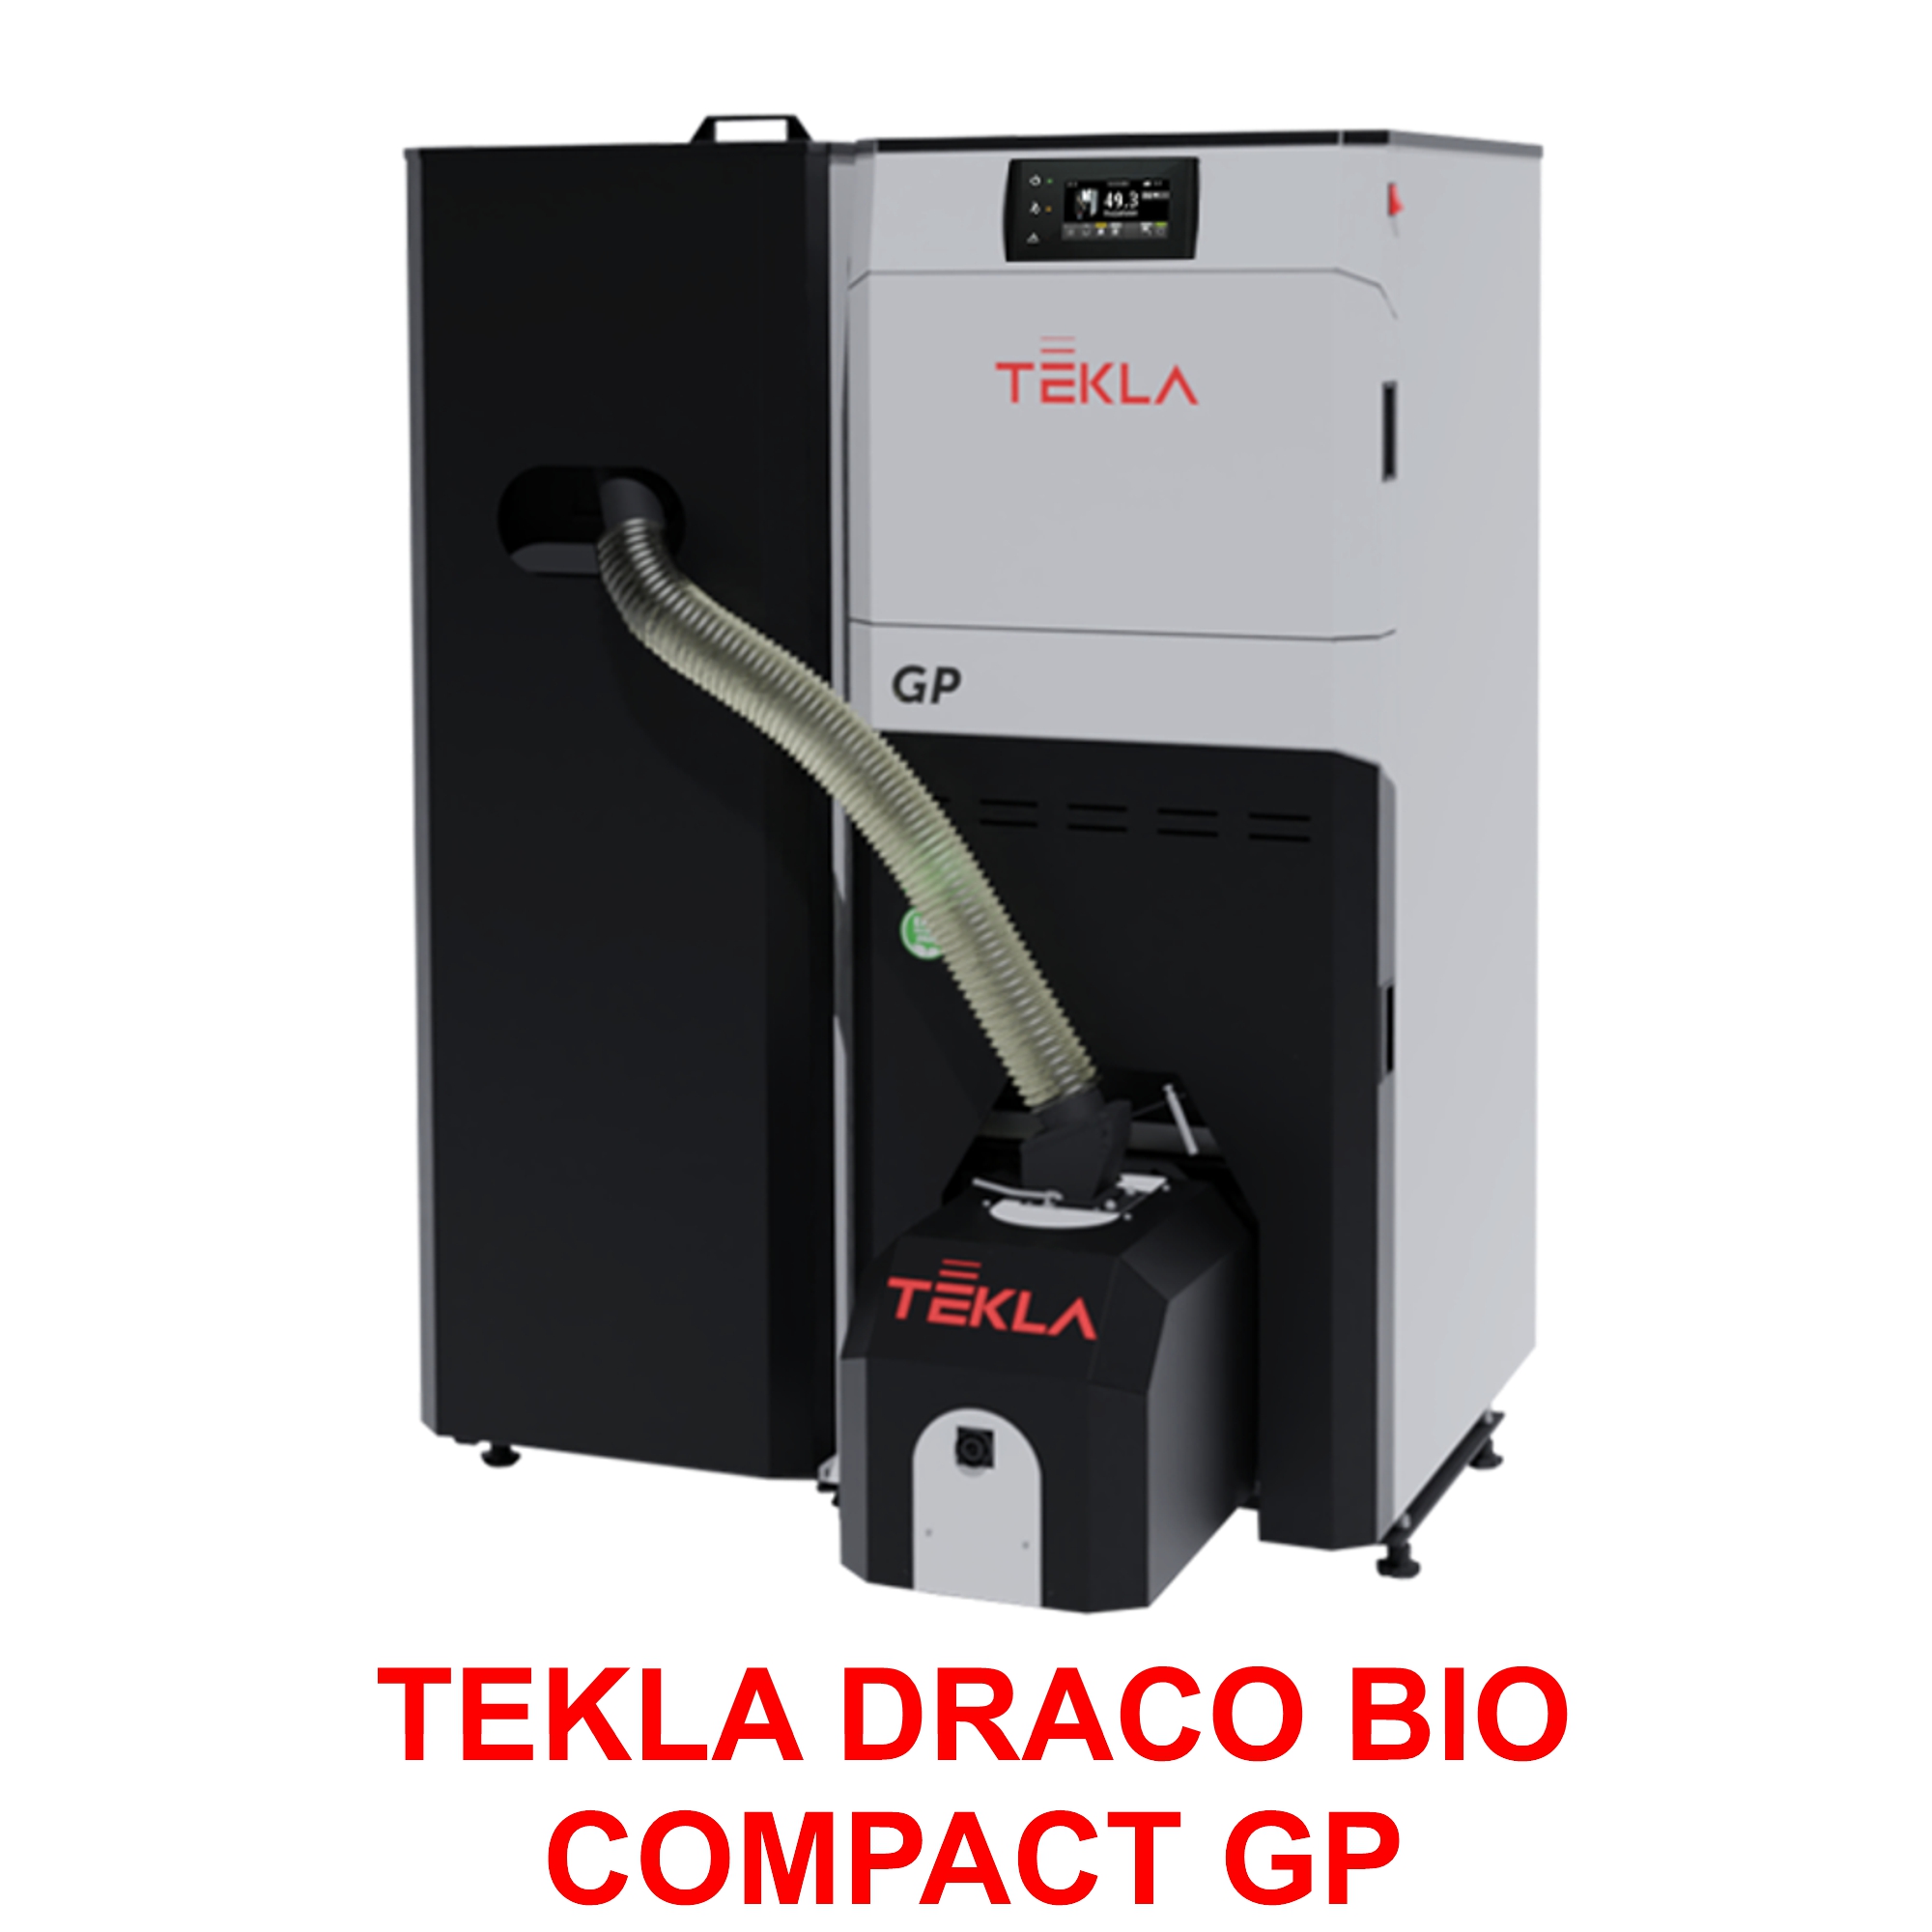 TEKLA DRACO BIO COMPACT GP